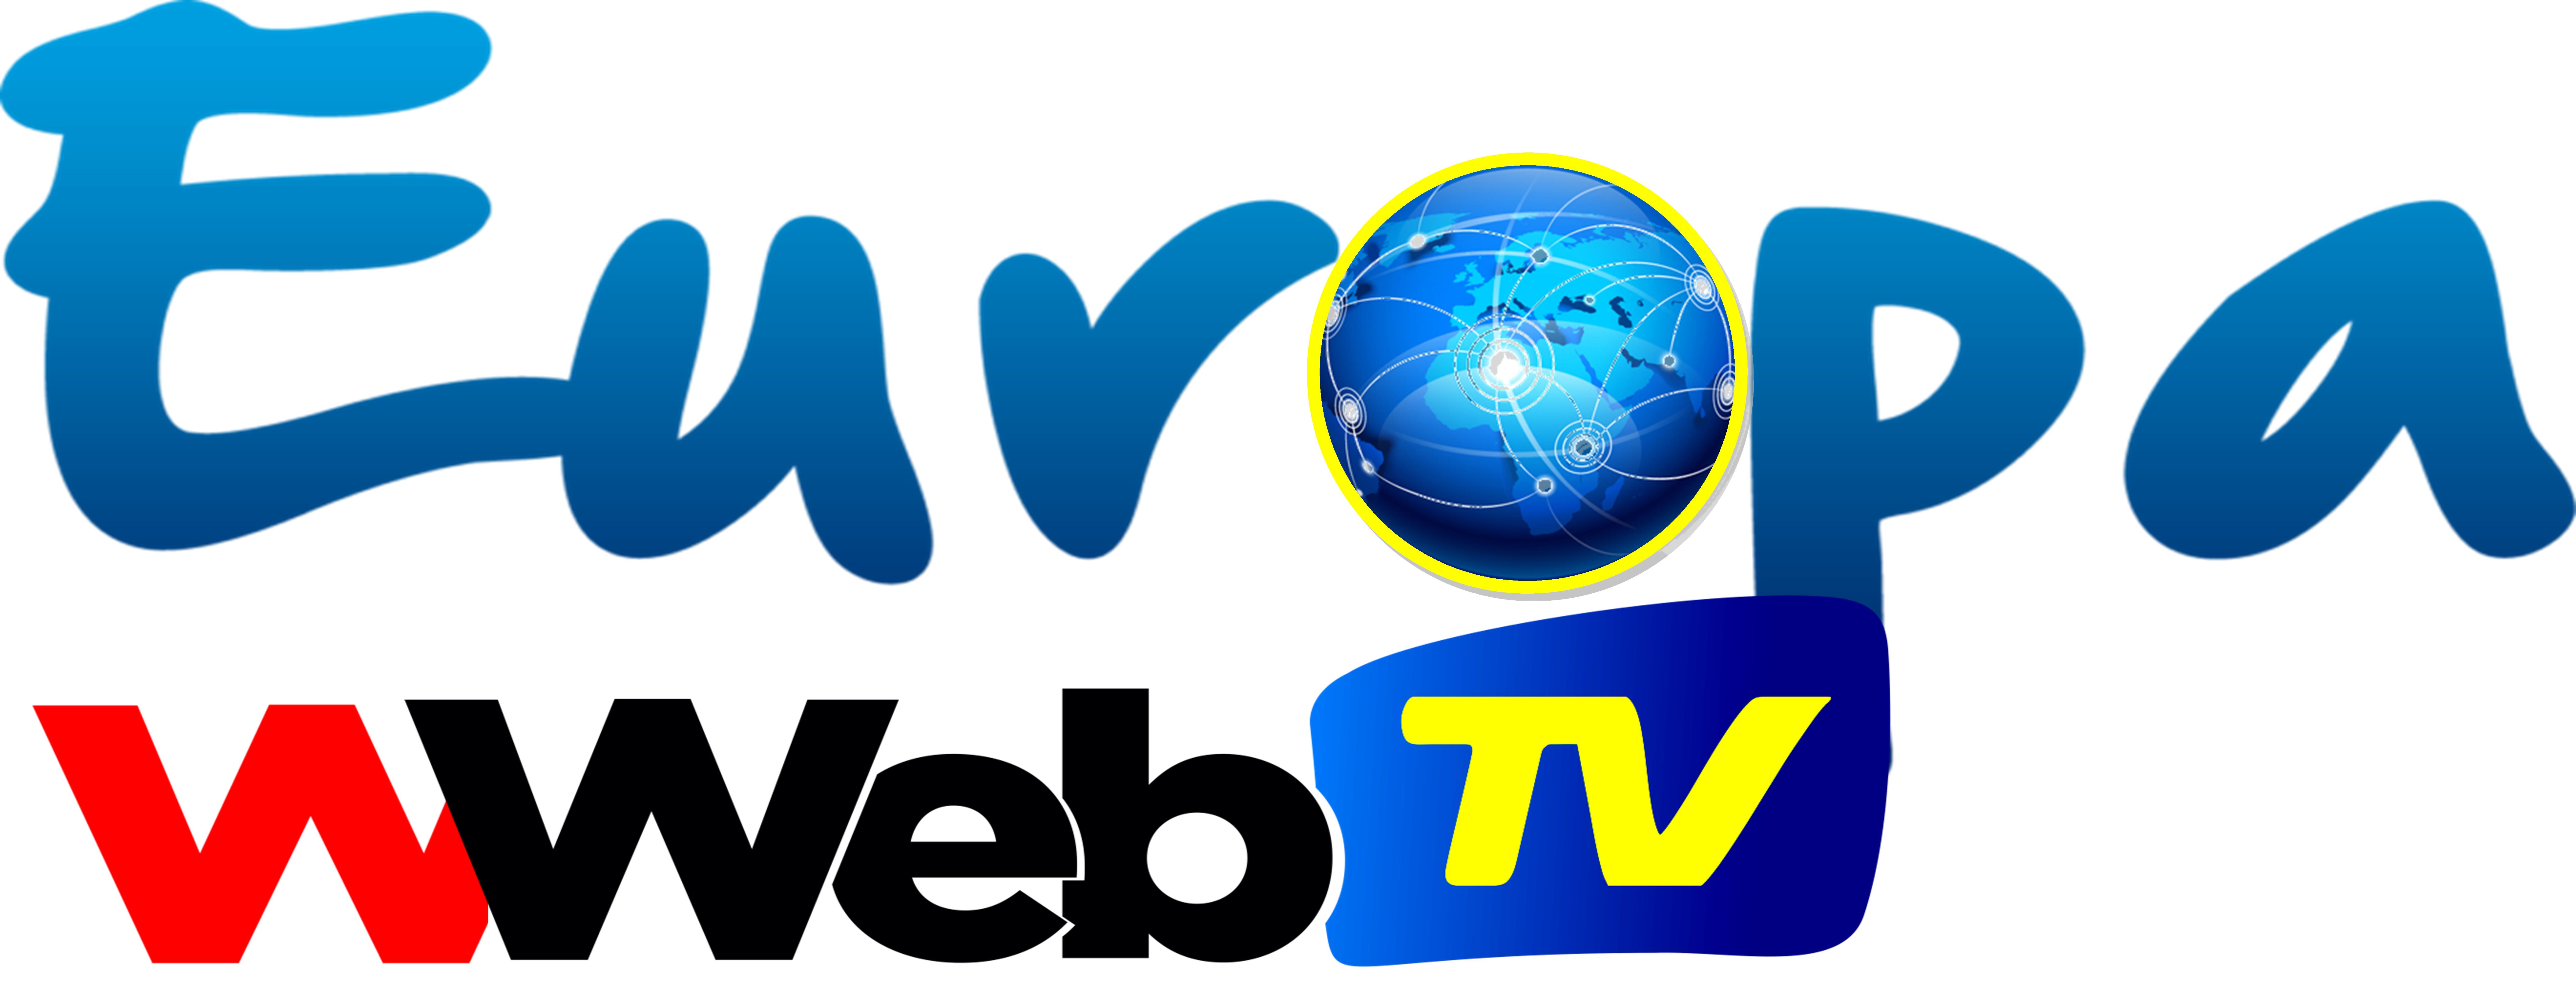 EUROPA WEB-TV